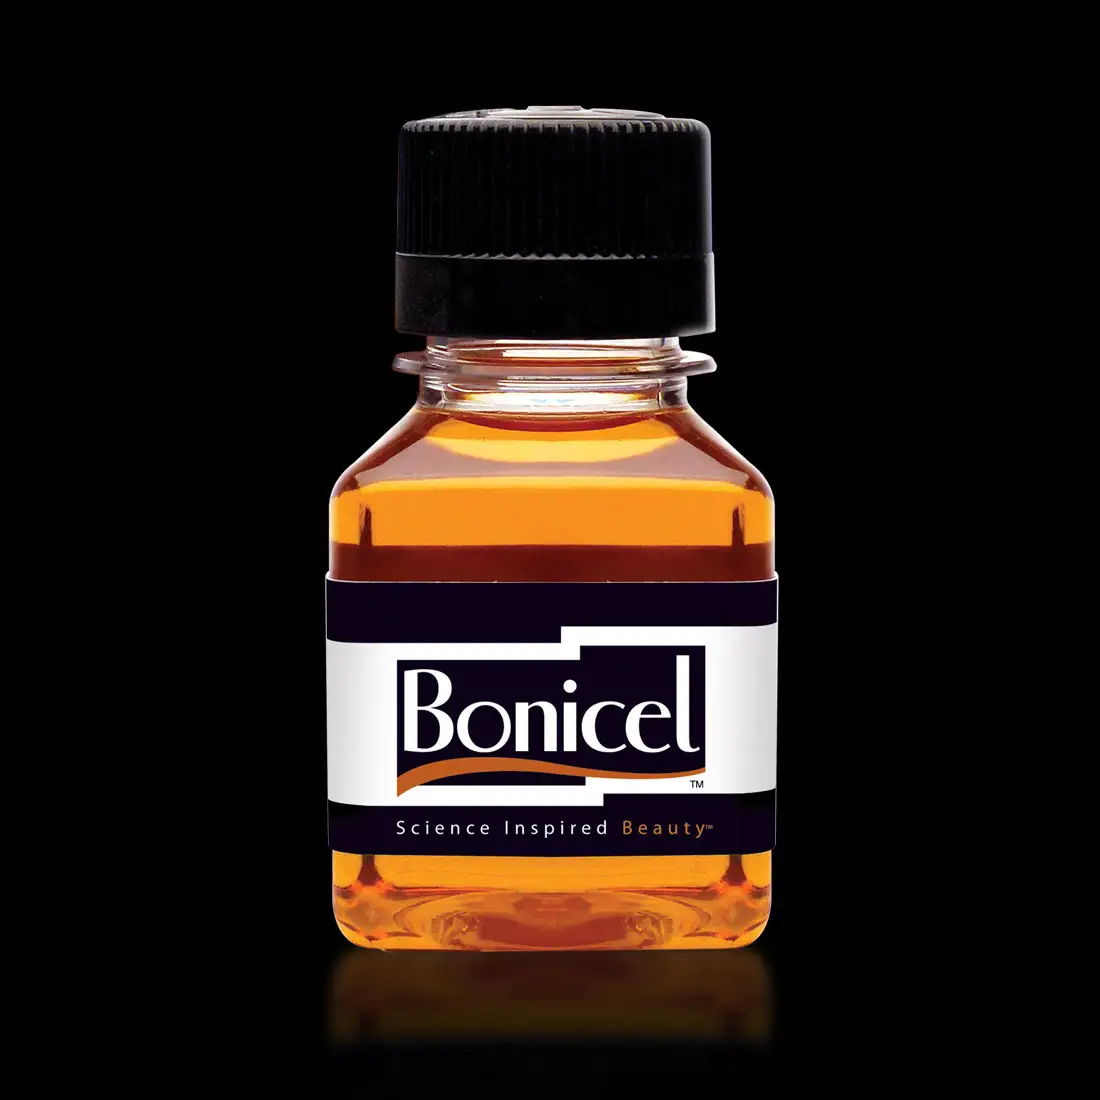 Bonicel product shot